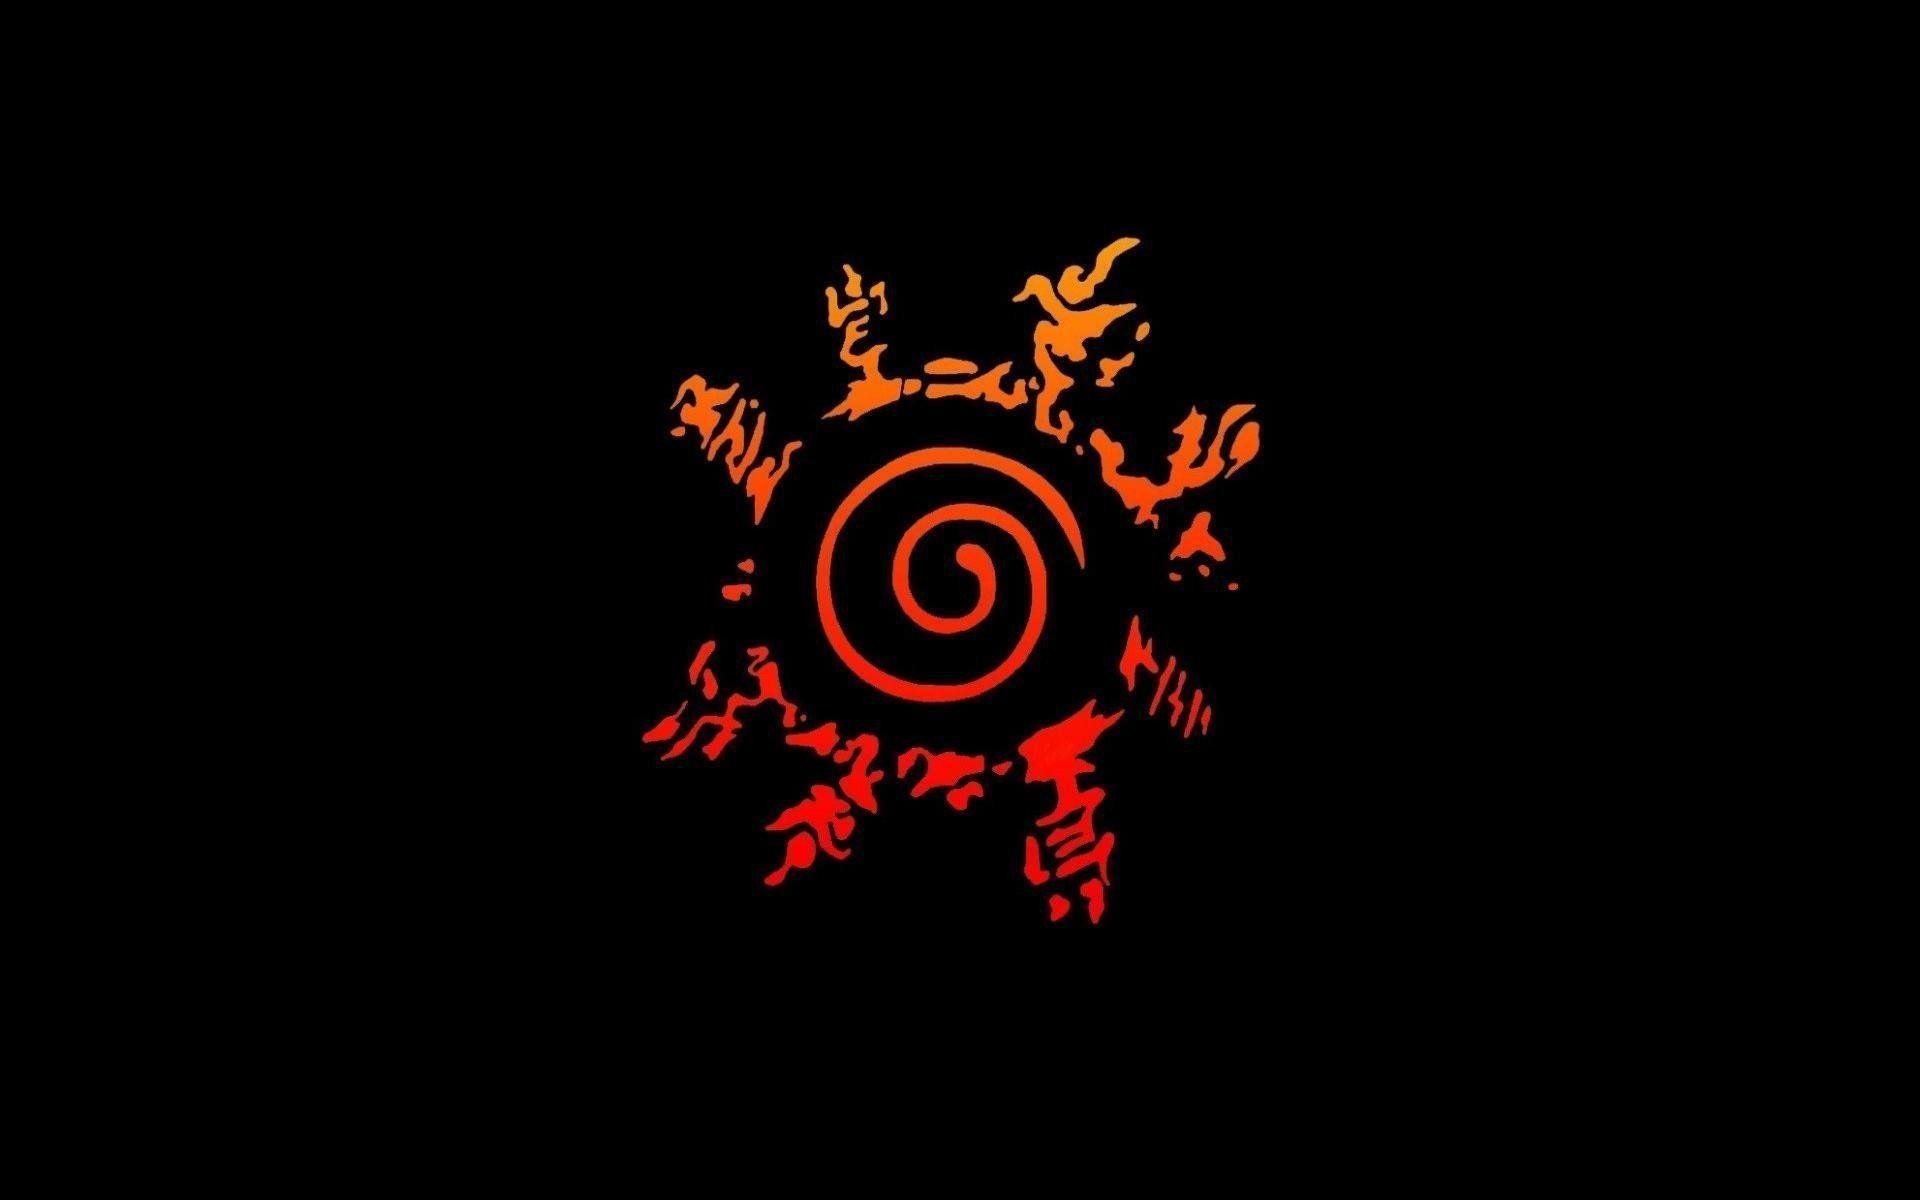 Uchiha Logo Wallpaper (Picture)